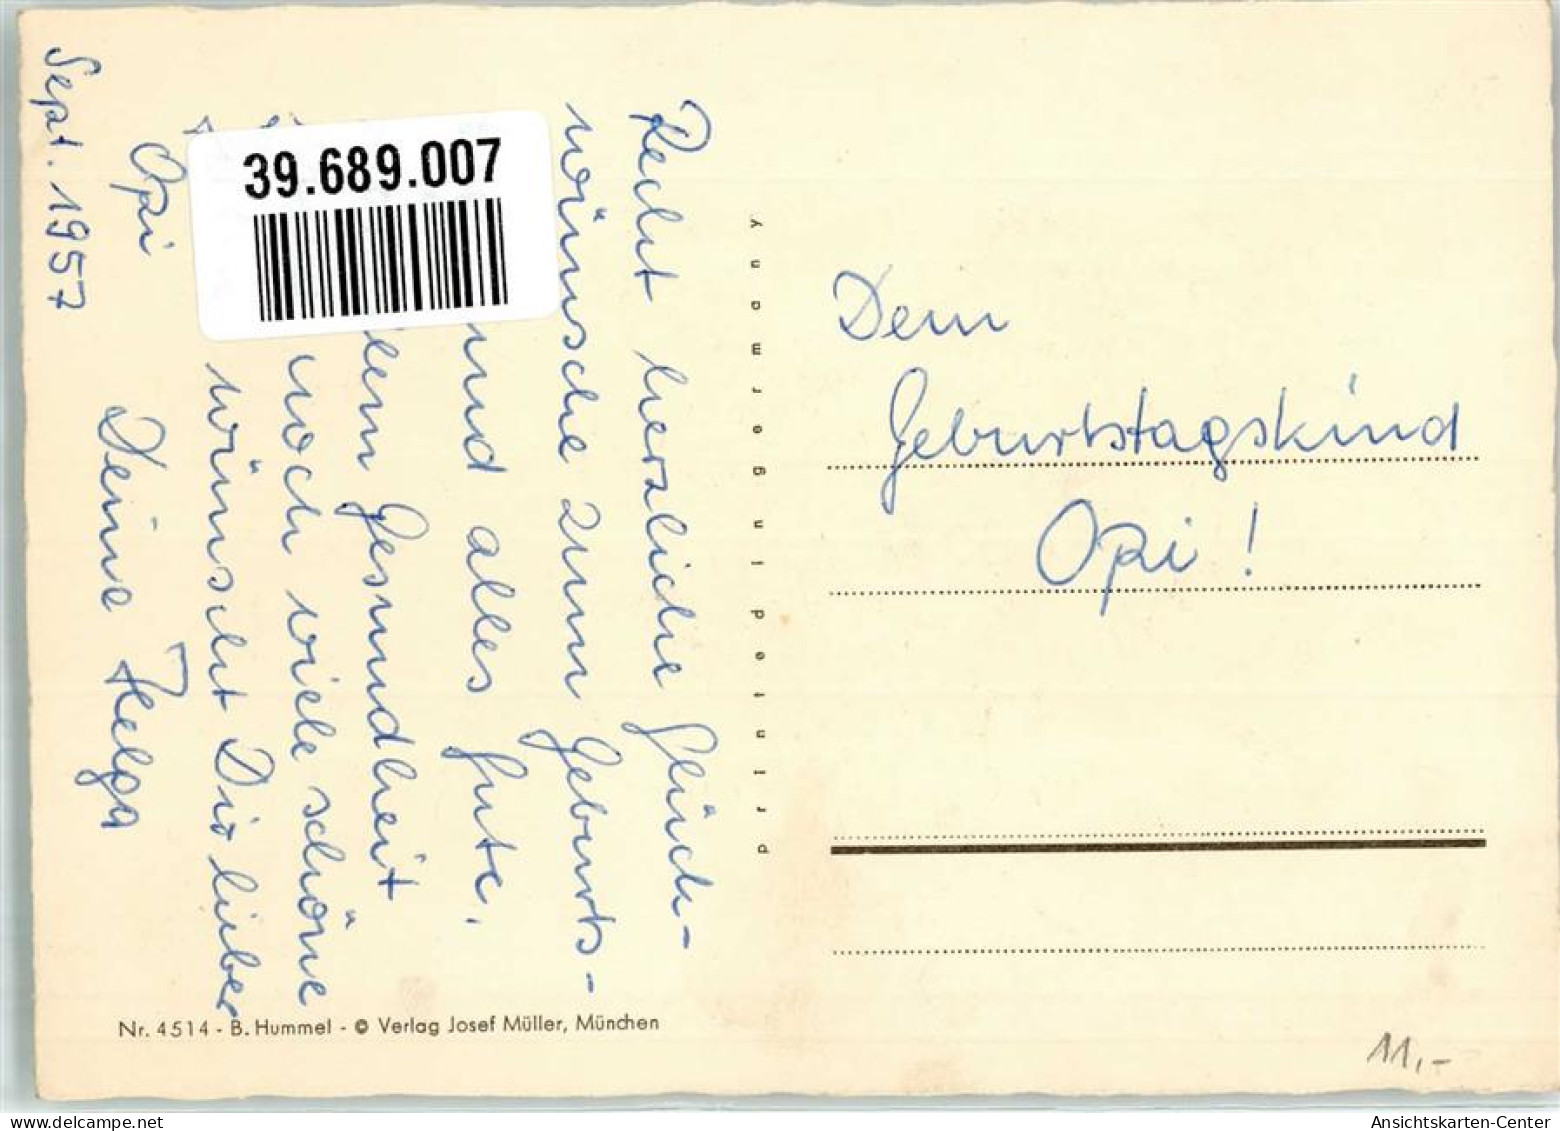 39689007 - Gratulant Sign. Hummel Verlag Josef Mueller Nr. 4514 - Angels